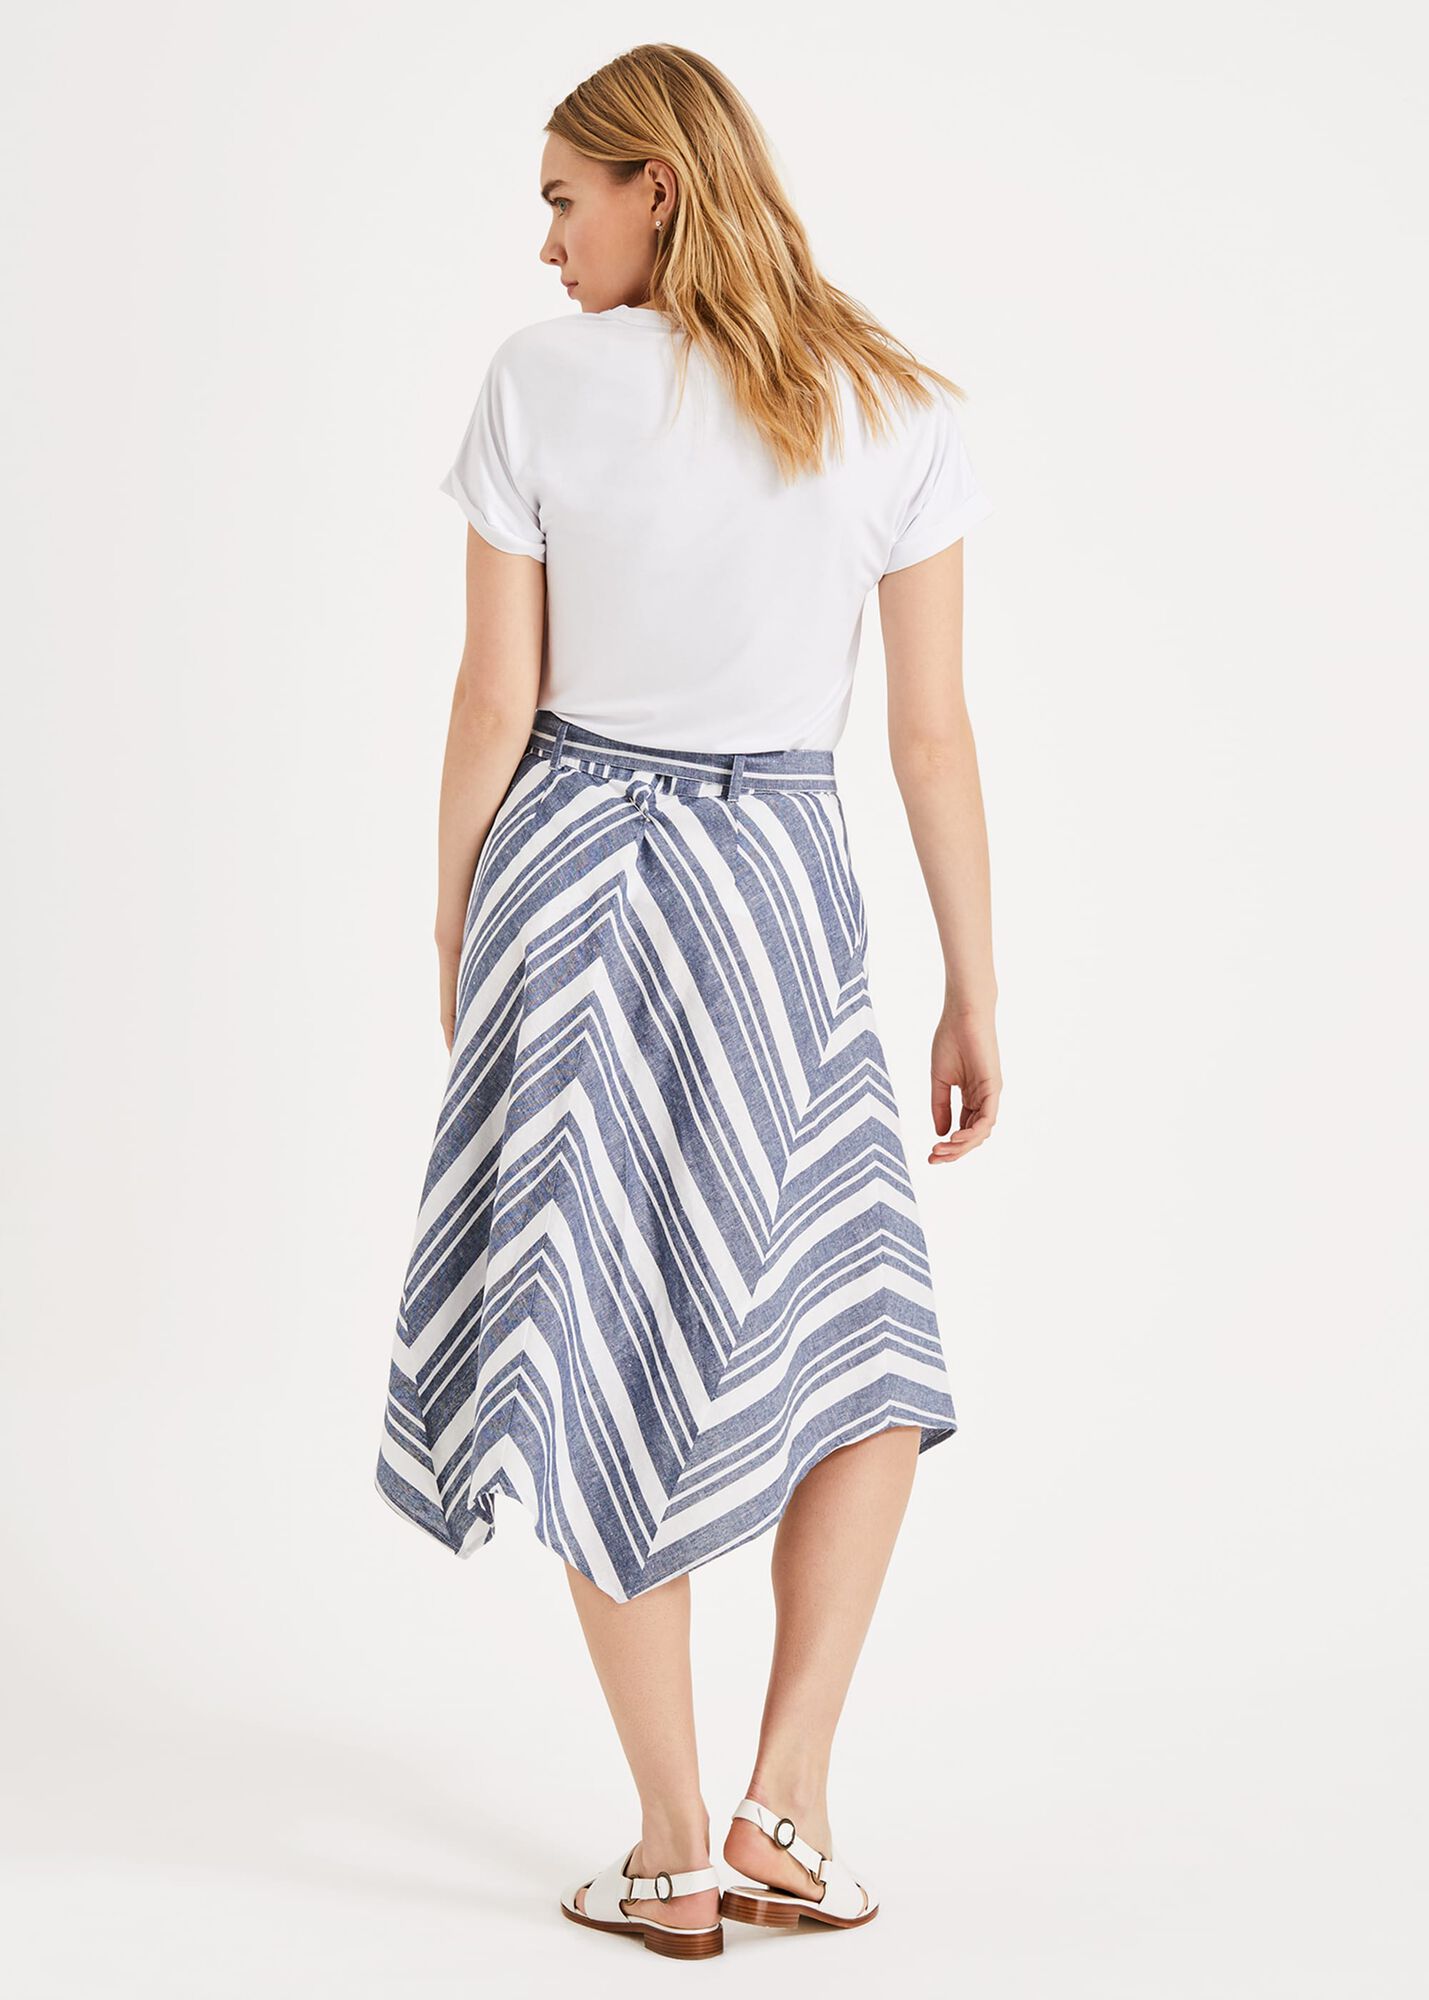 Maggiore Linen Stripe Skirt | Phase Eight